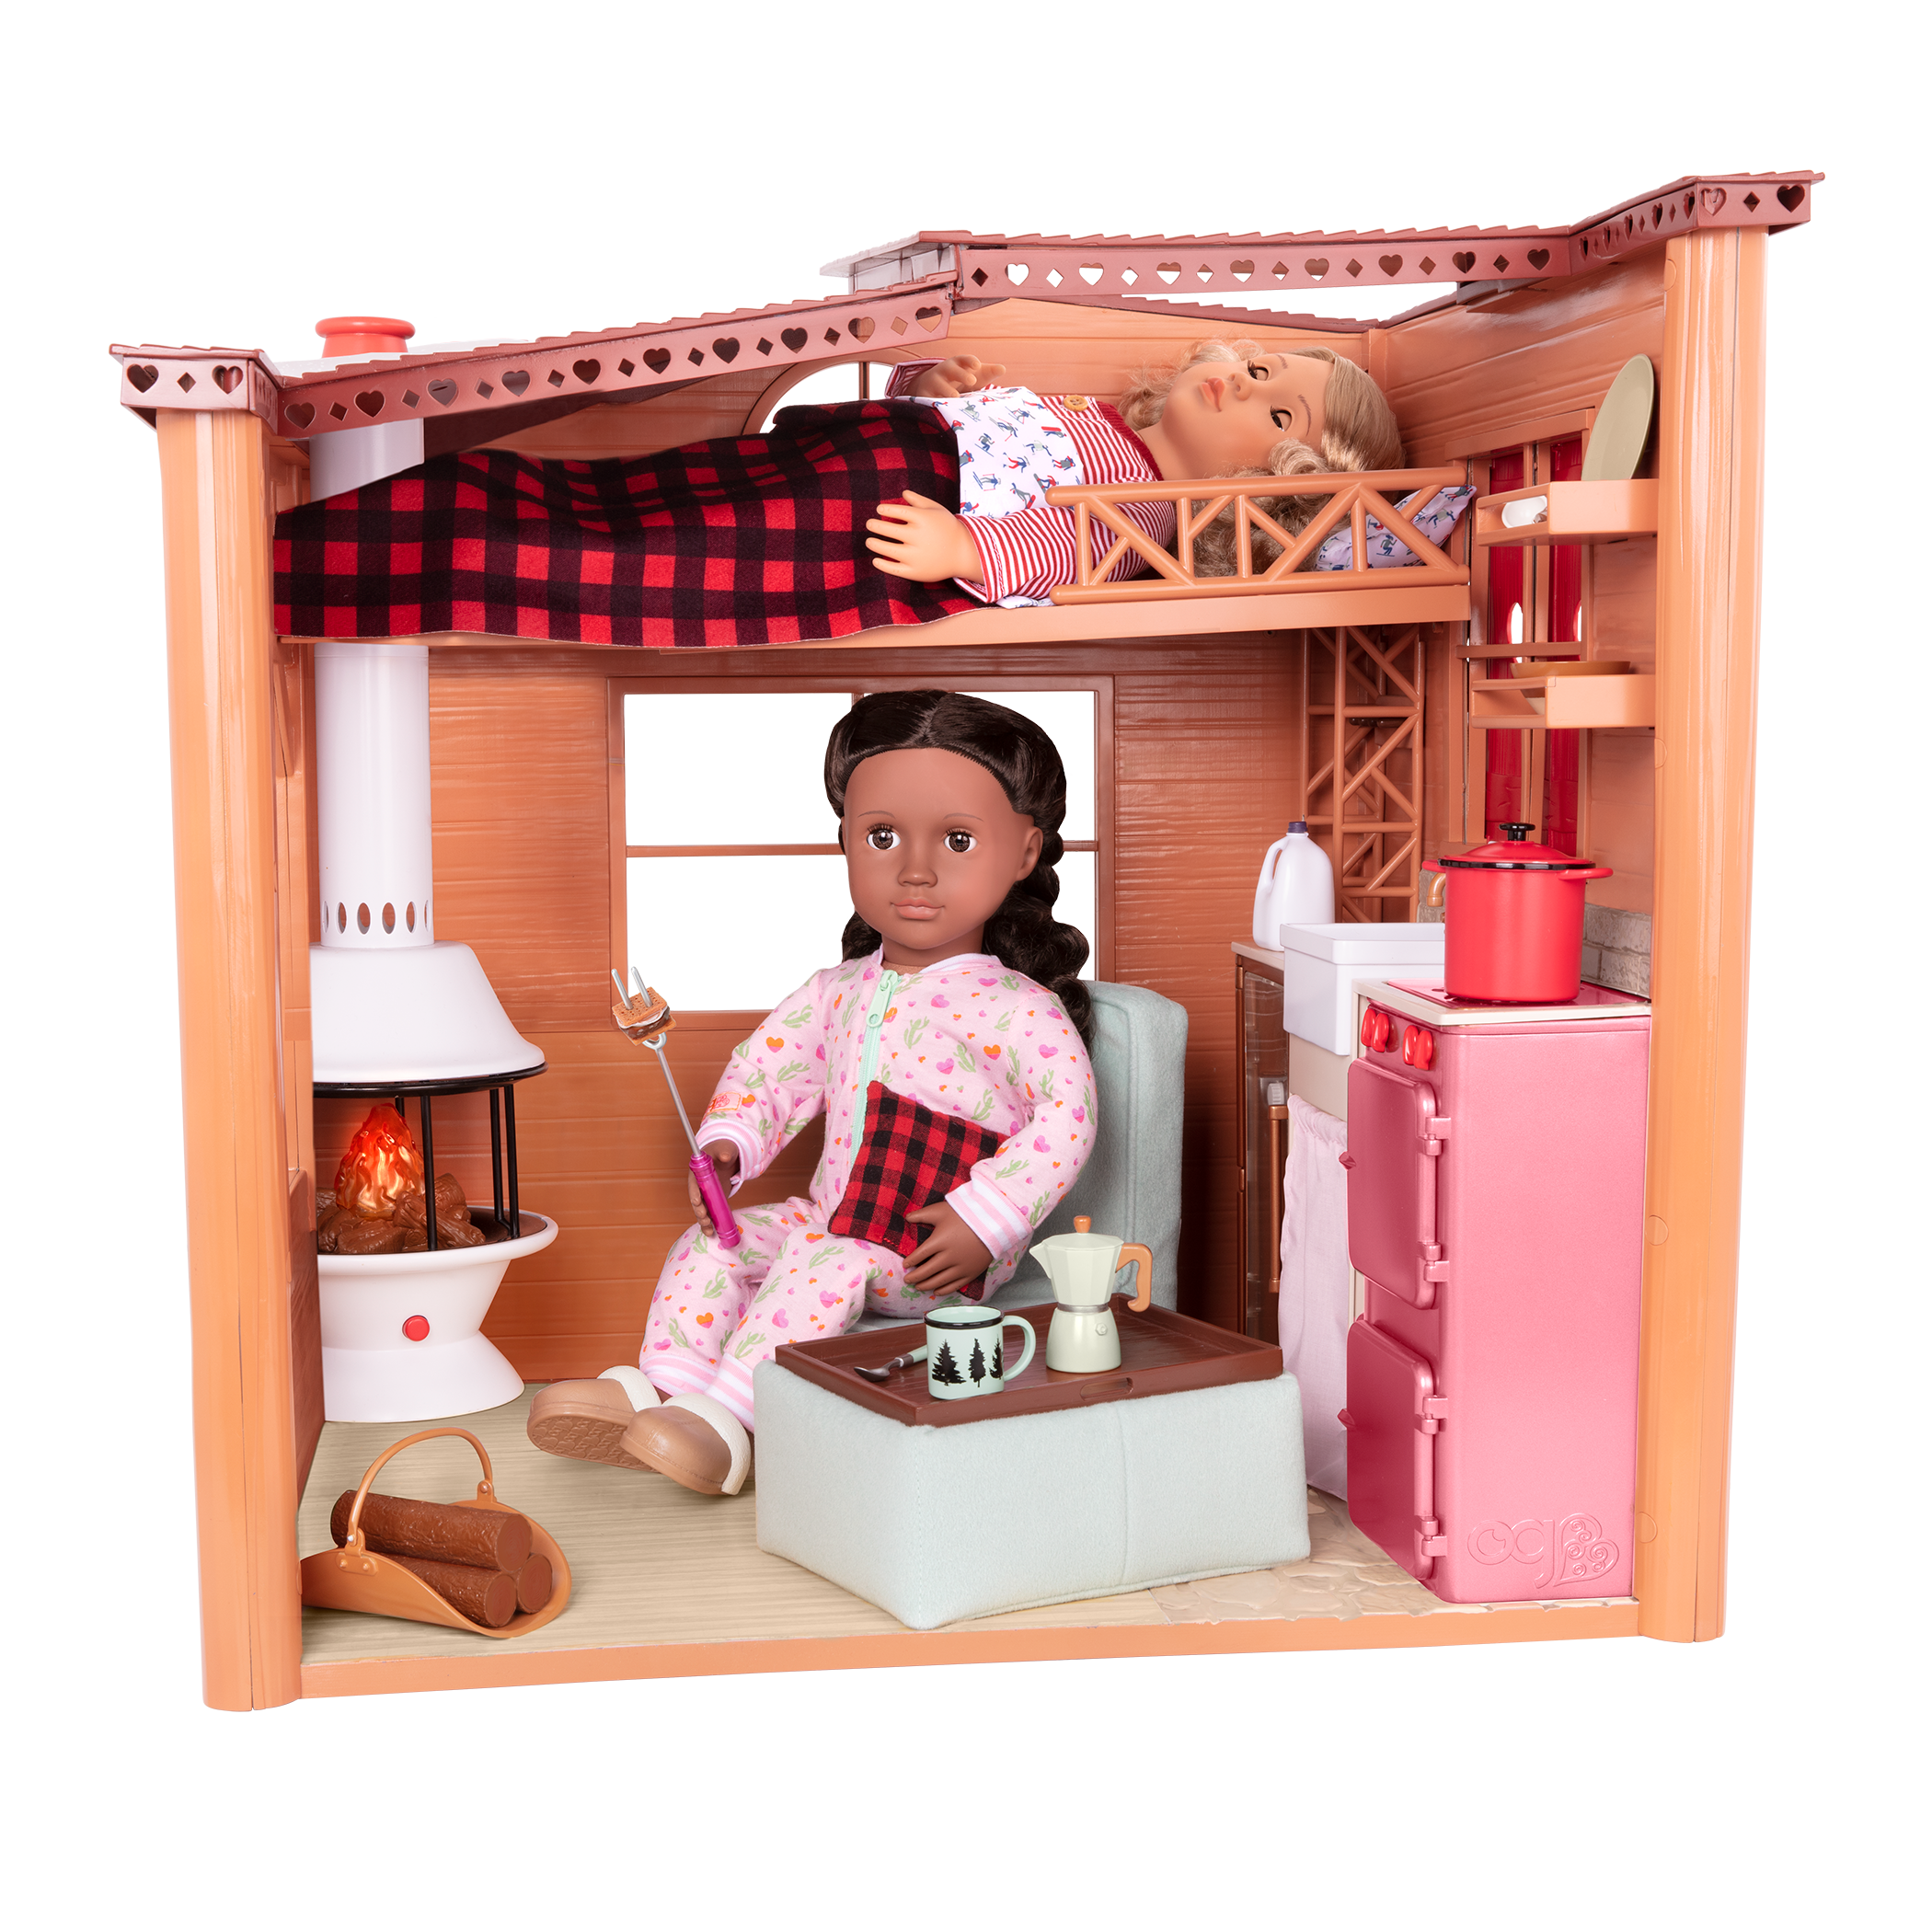 Cozy Cabin Dollhouse Playset for 18-inch Dolls 